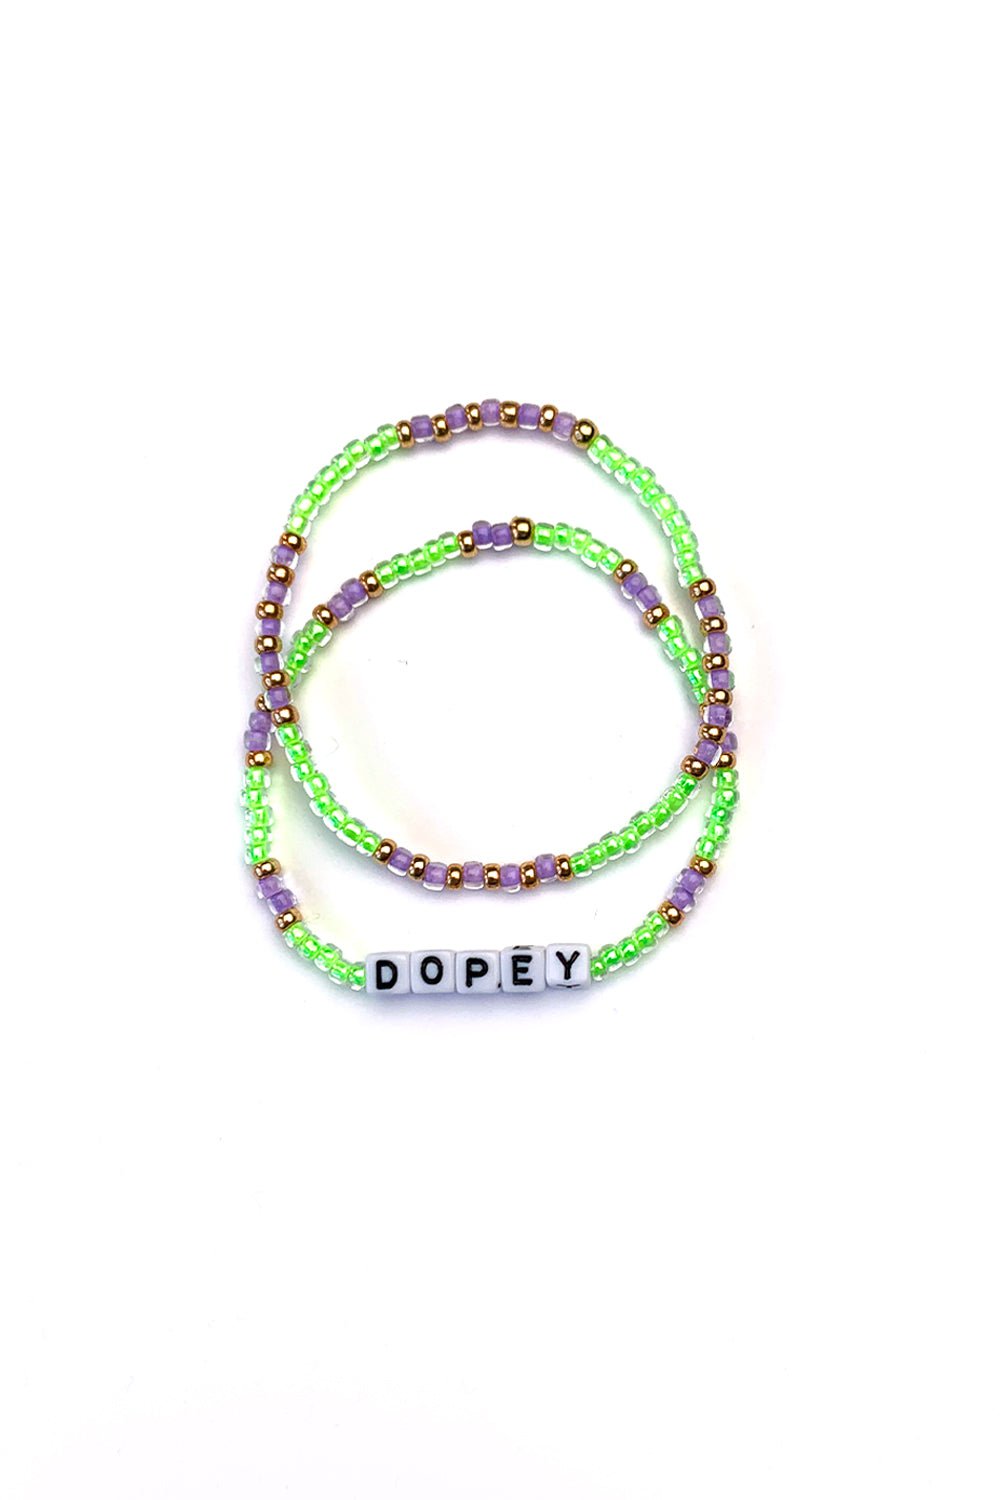 Oxidised Silver Bracelet | Adjustable Replica Bracelet